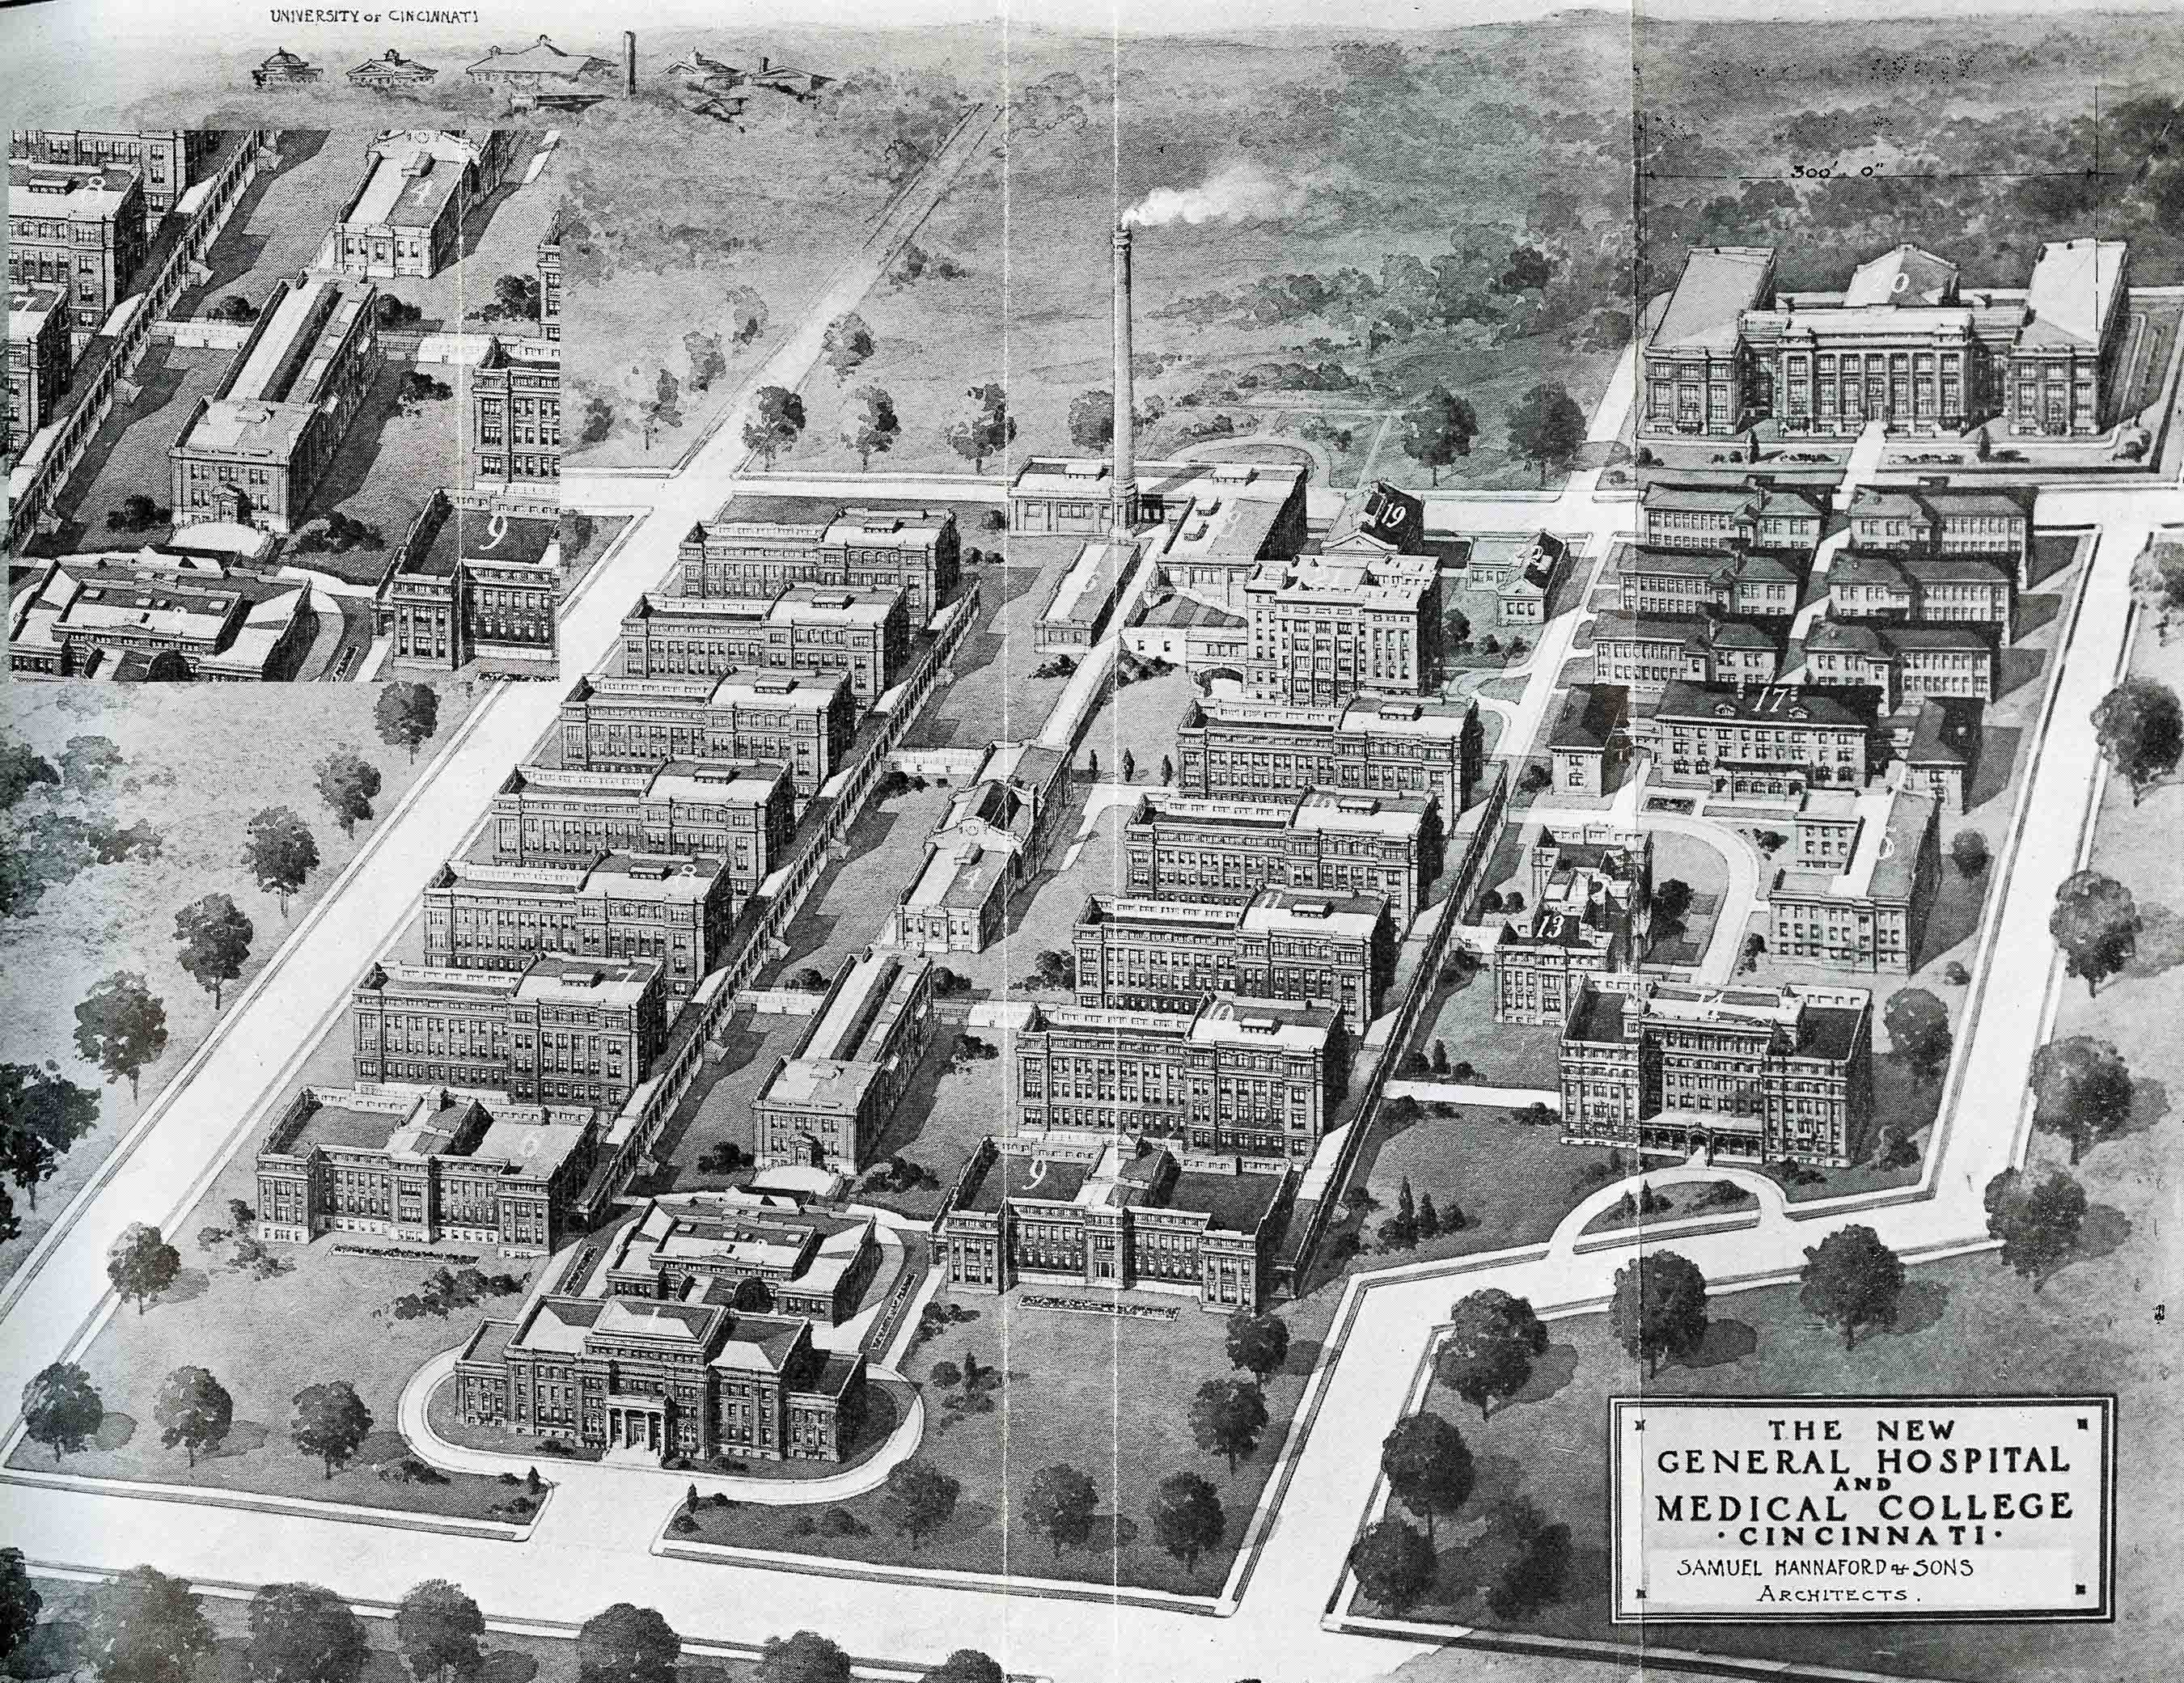 Cincinnati General Hospital's Intended Block Plan